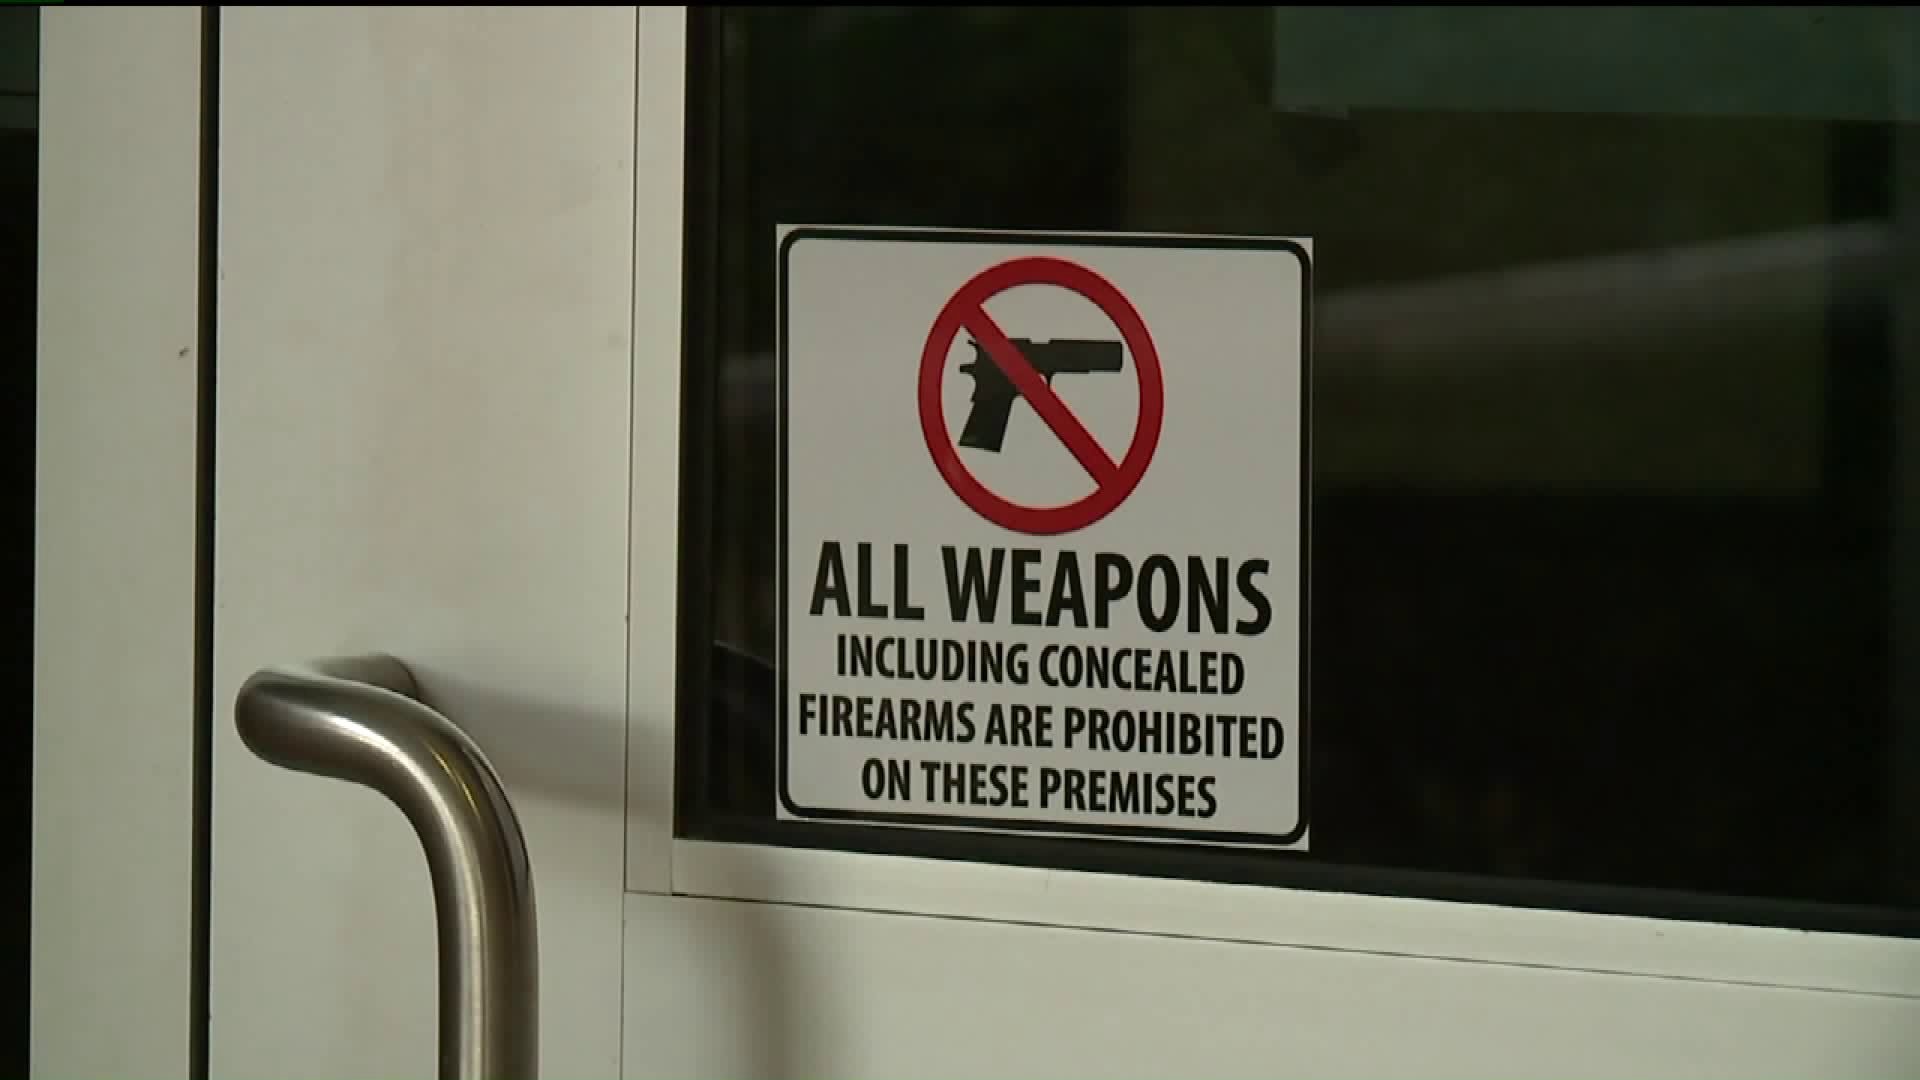 Employee Brings Gun to School After Threatening Message at School